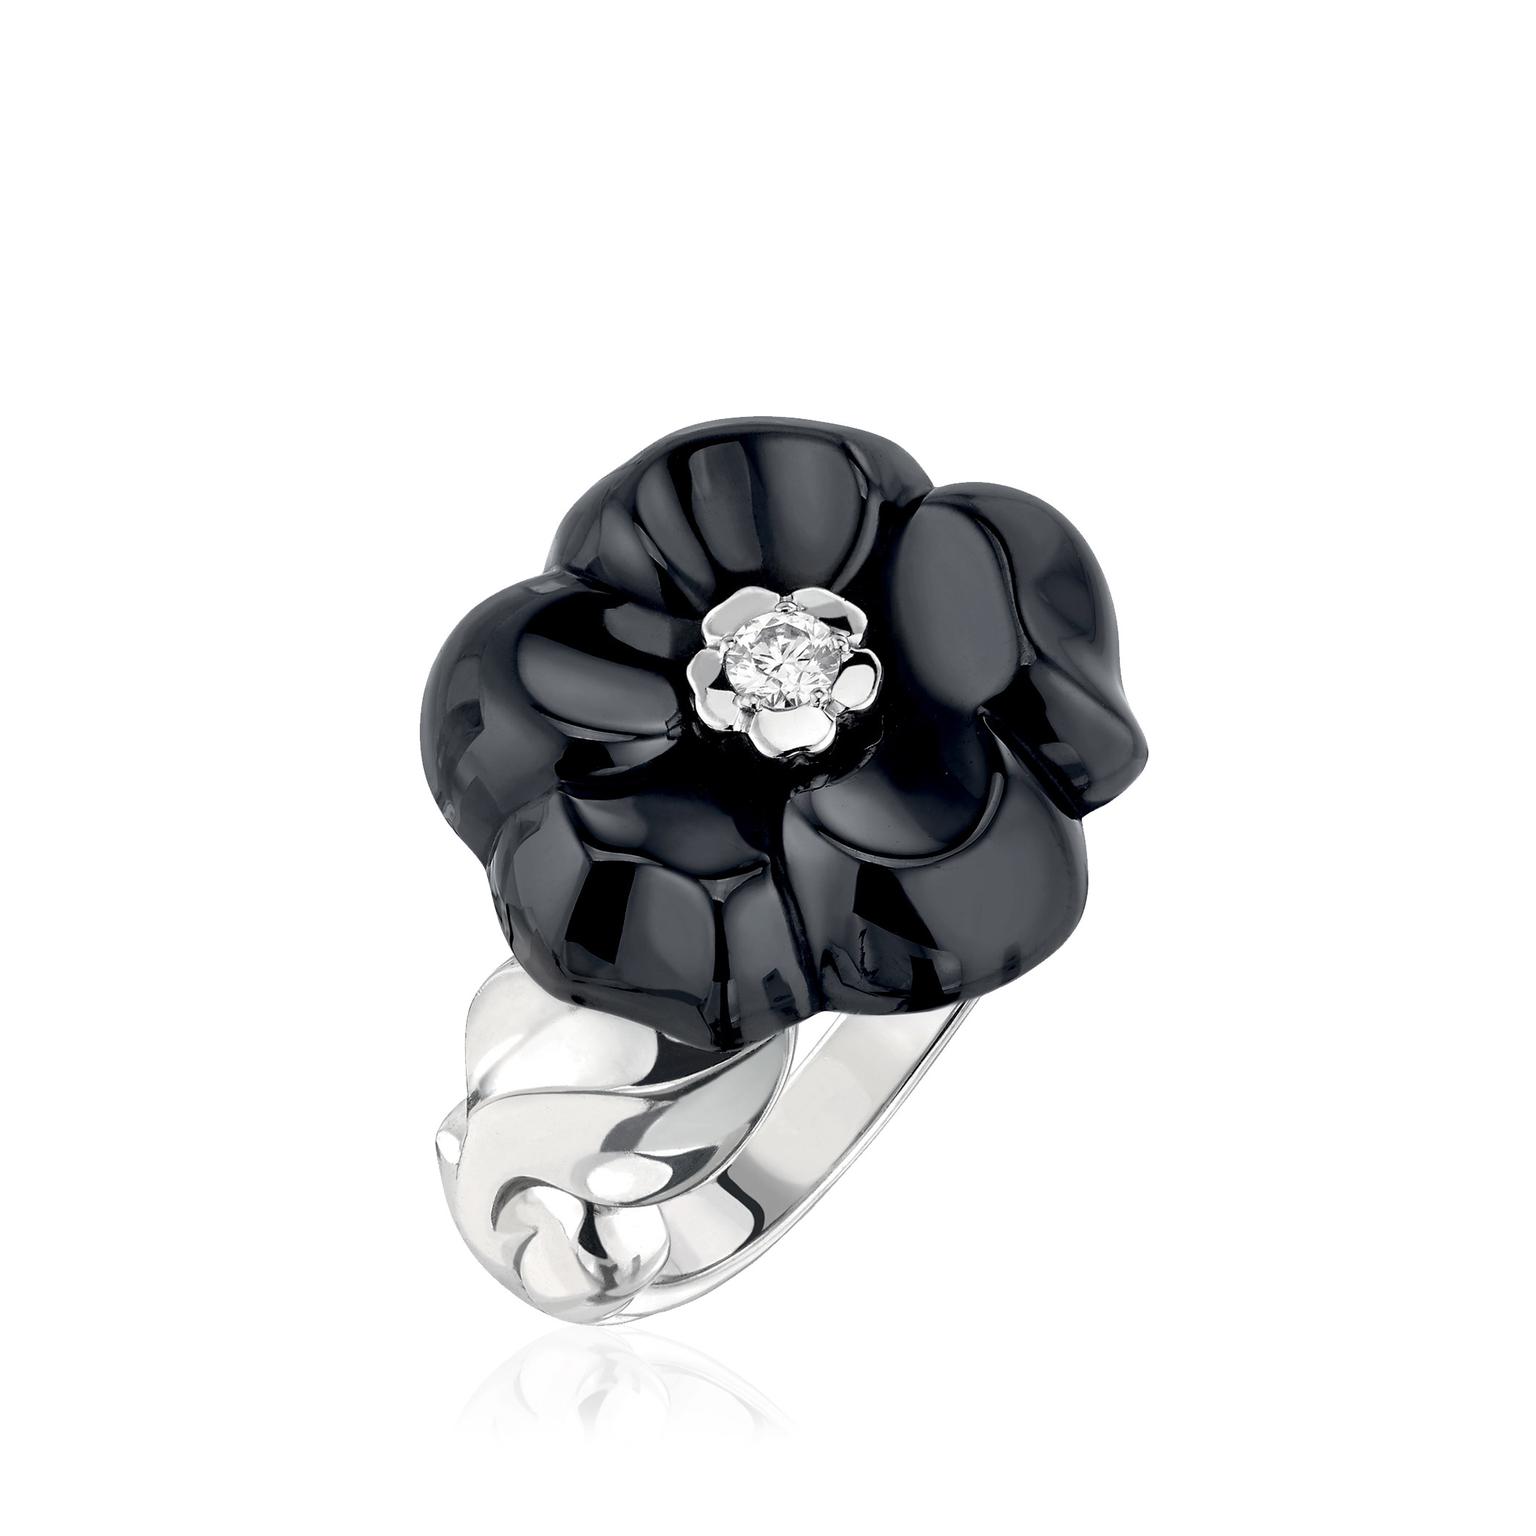 Chanel-Camelia-Galbe-ring-black-ceramic-zoom